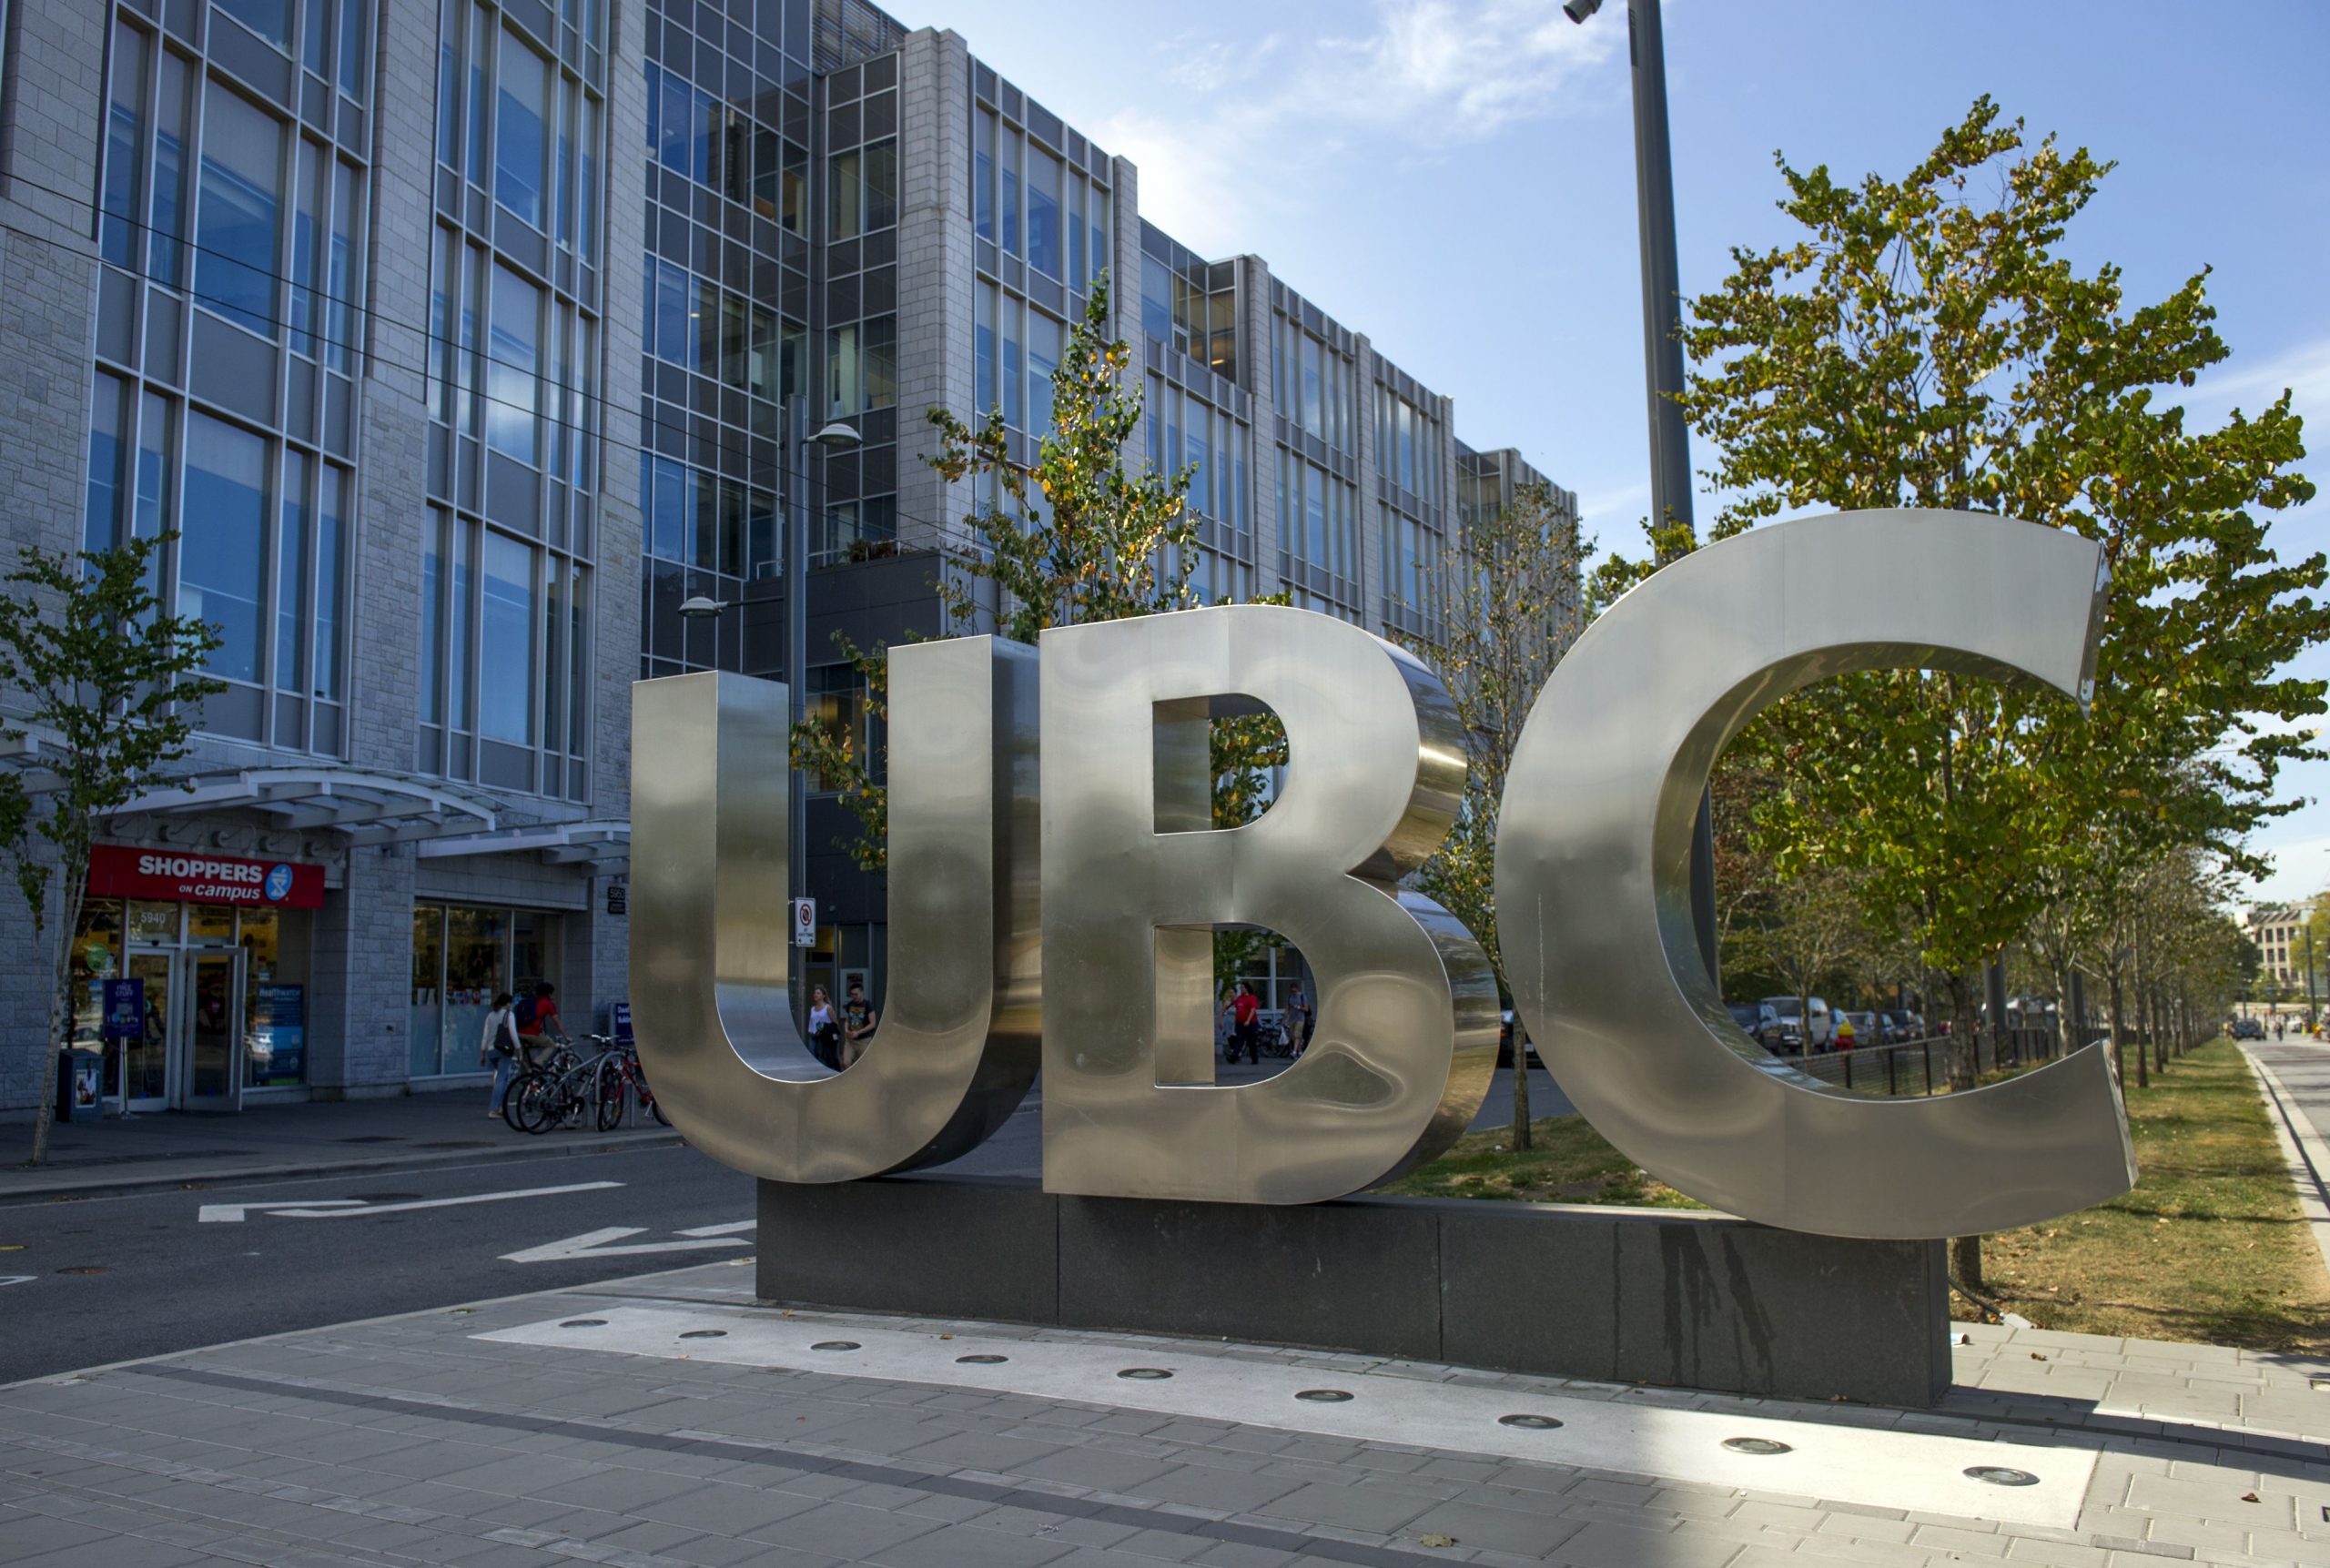 ubc application essays examples